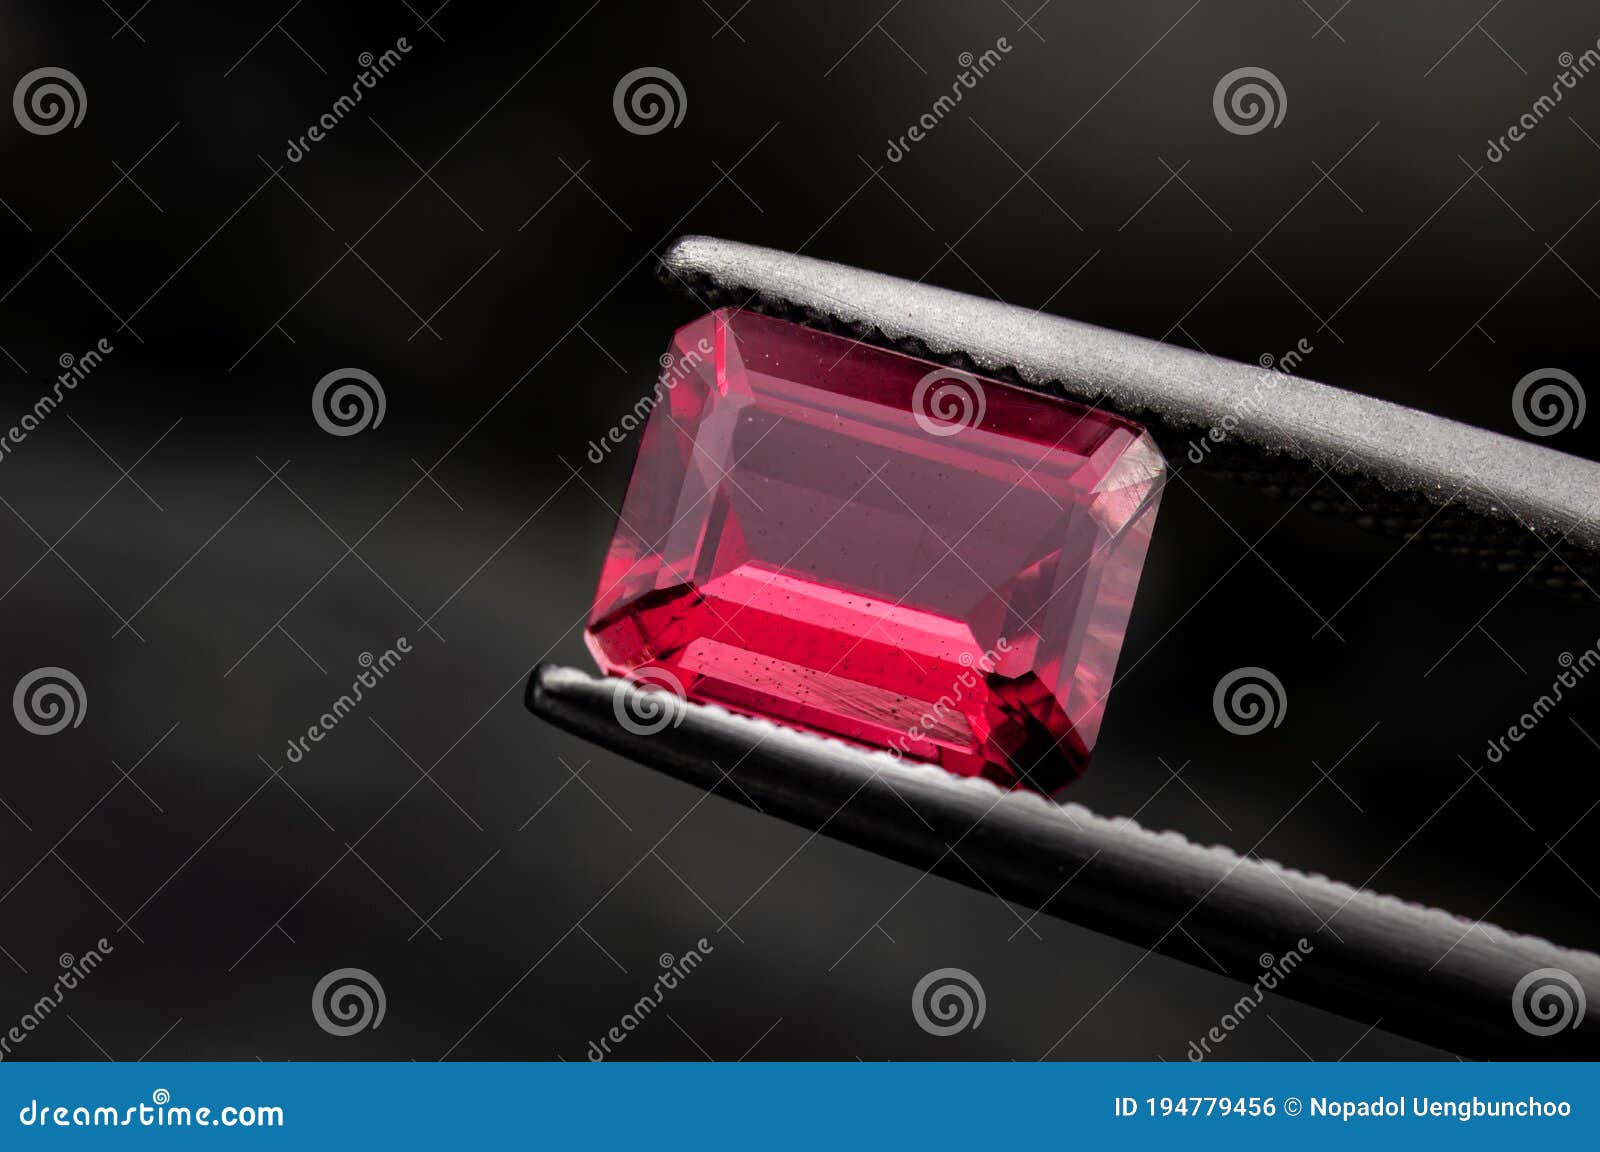 red ruby gemstone with dark rock